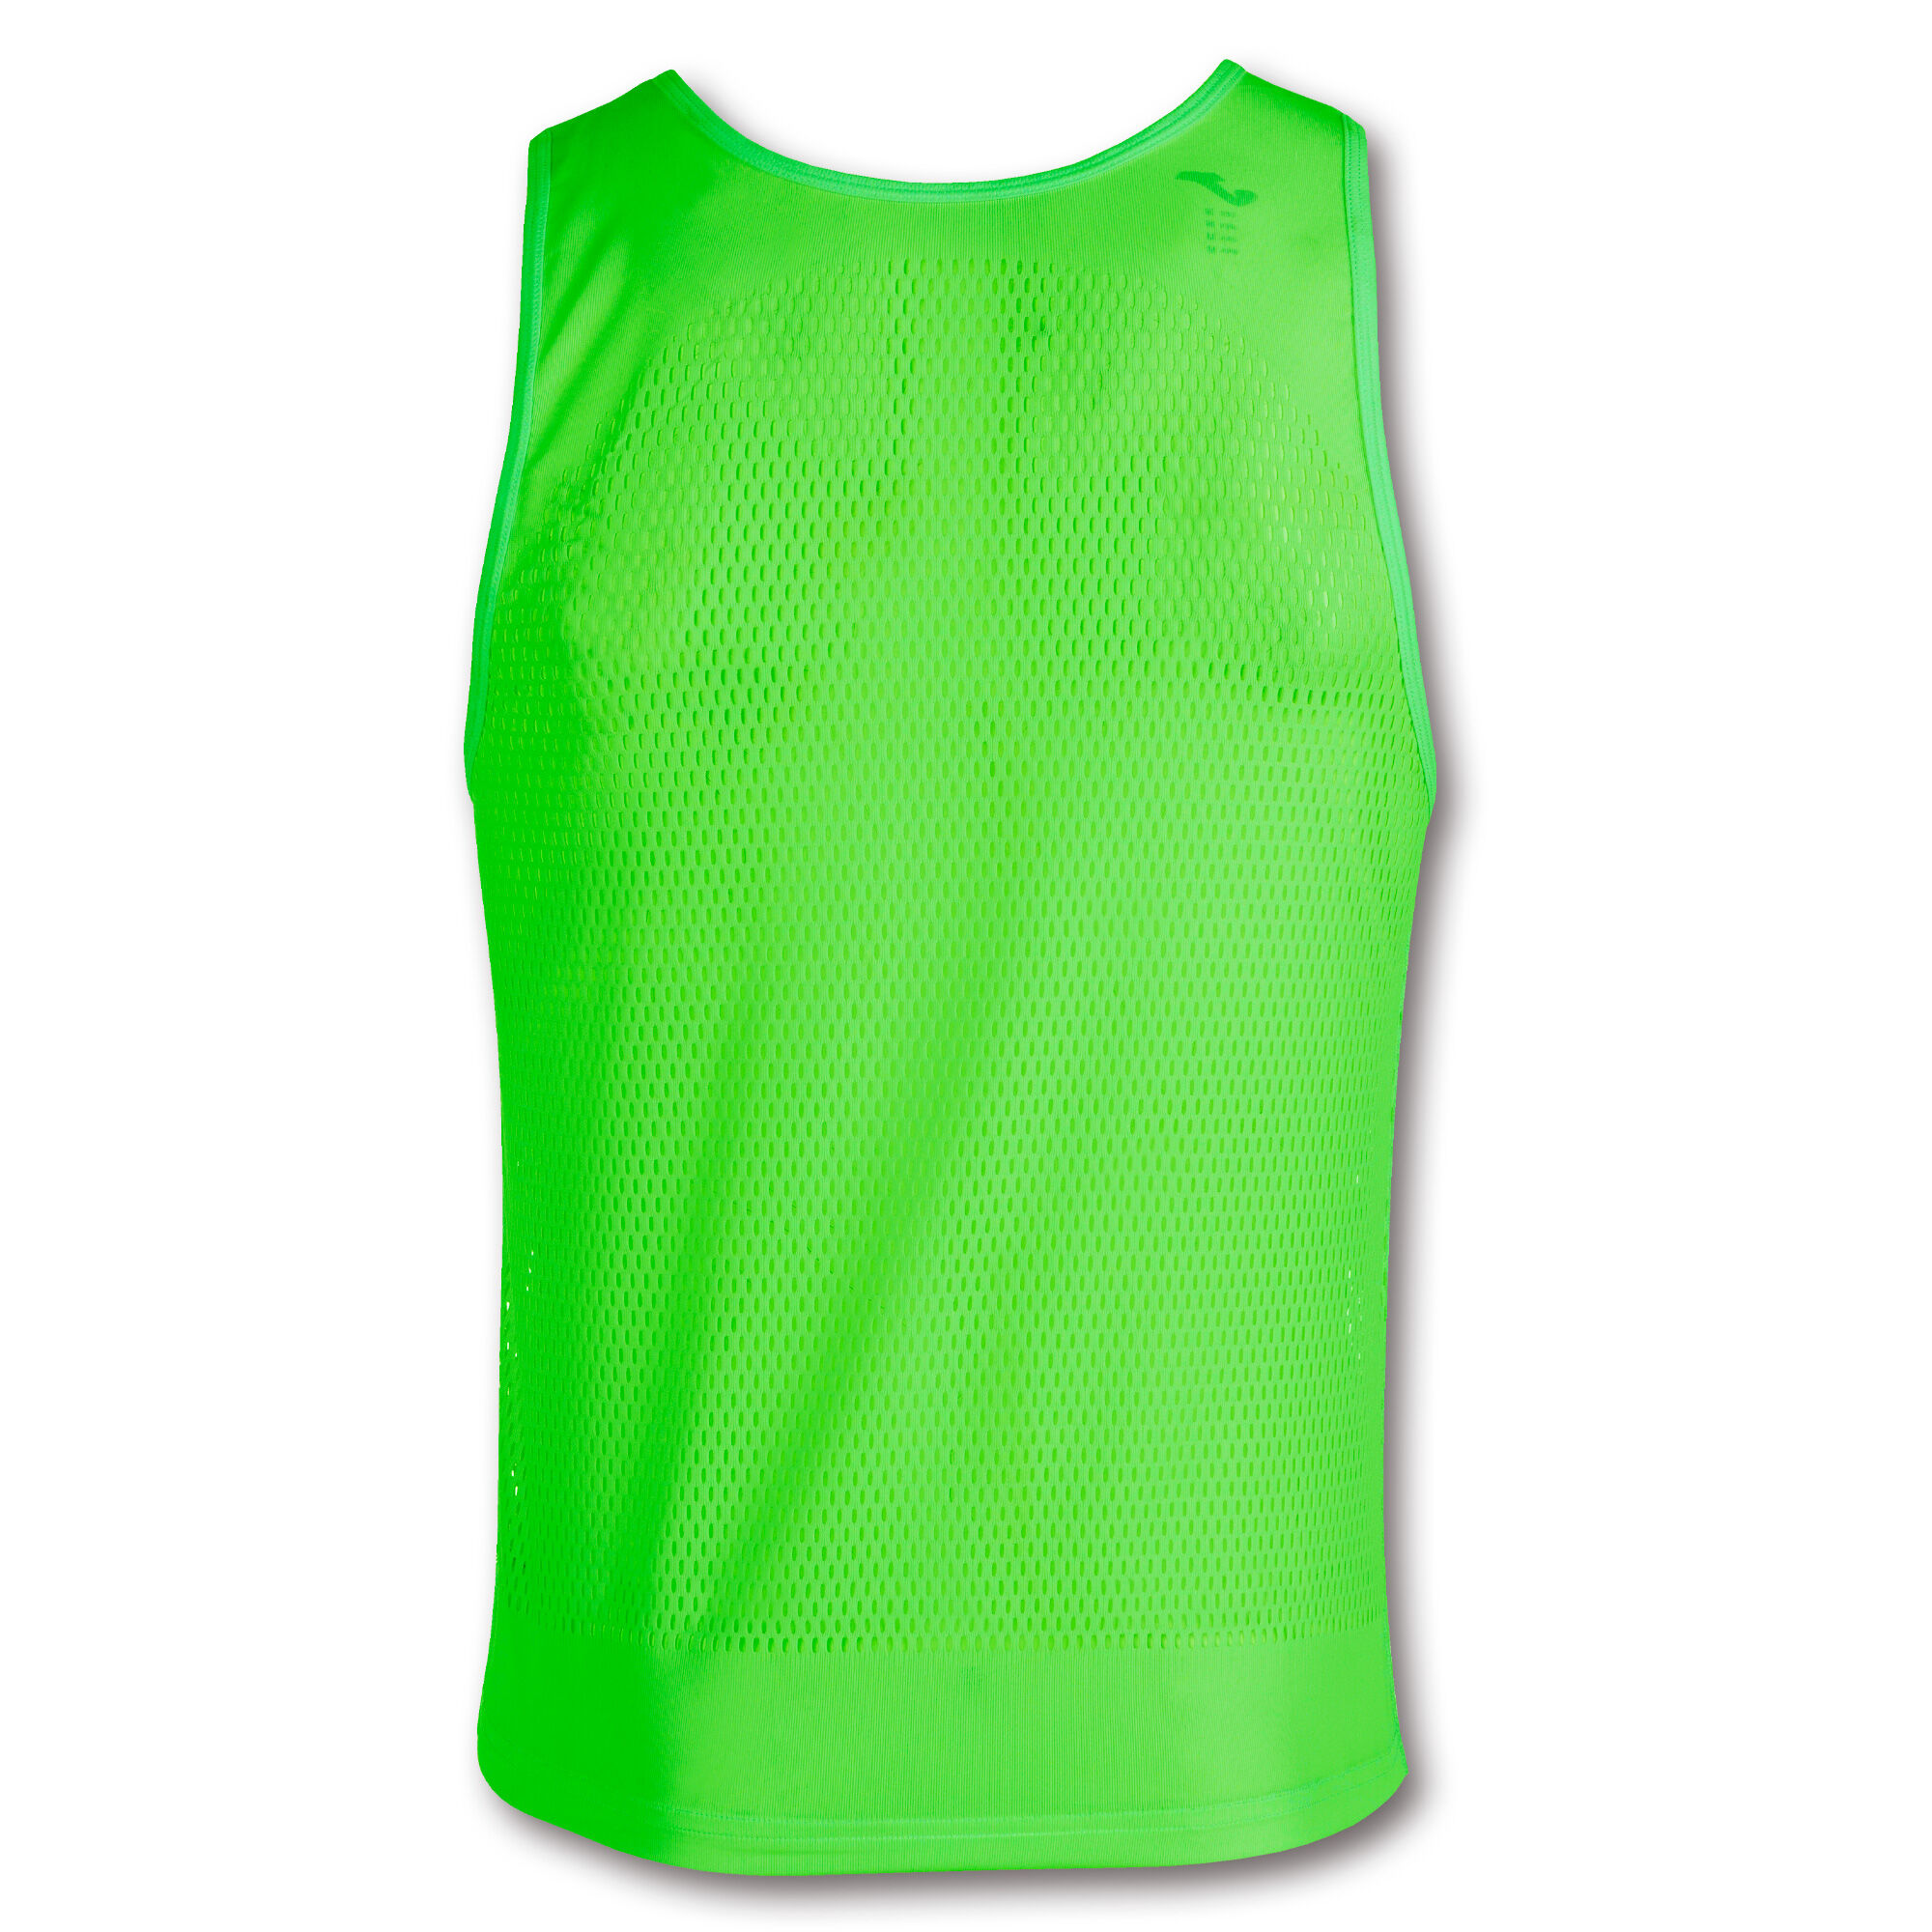 Camiseta tirantes hombre Marathon verde flúor